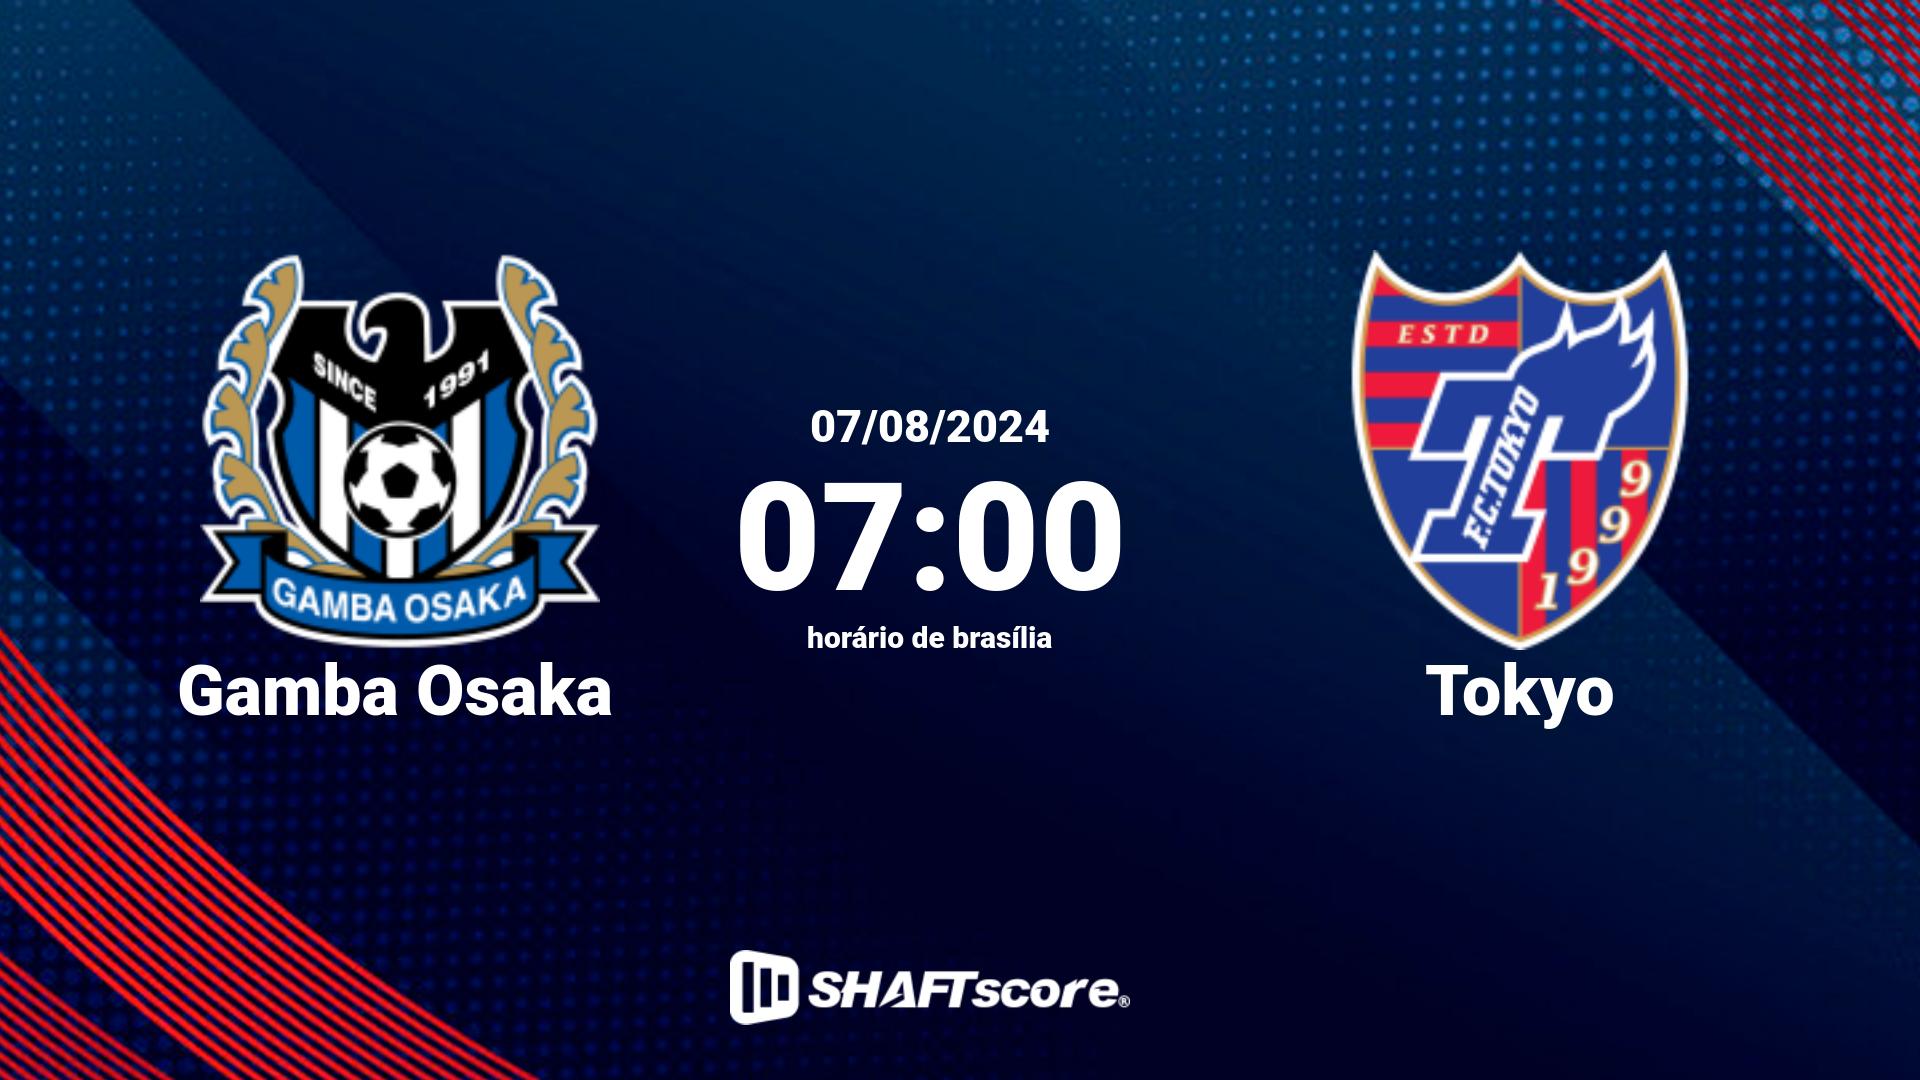 Estatísticas do jogo Gamba Osaka vs Tokyo 07.08 07:00